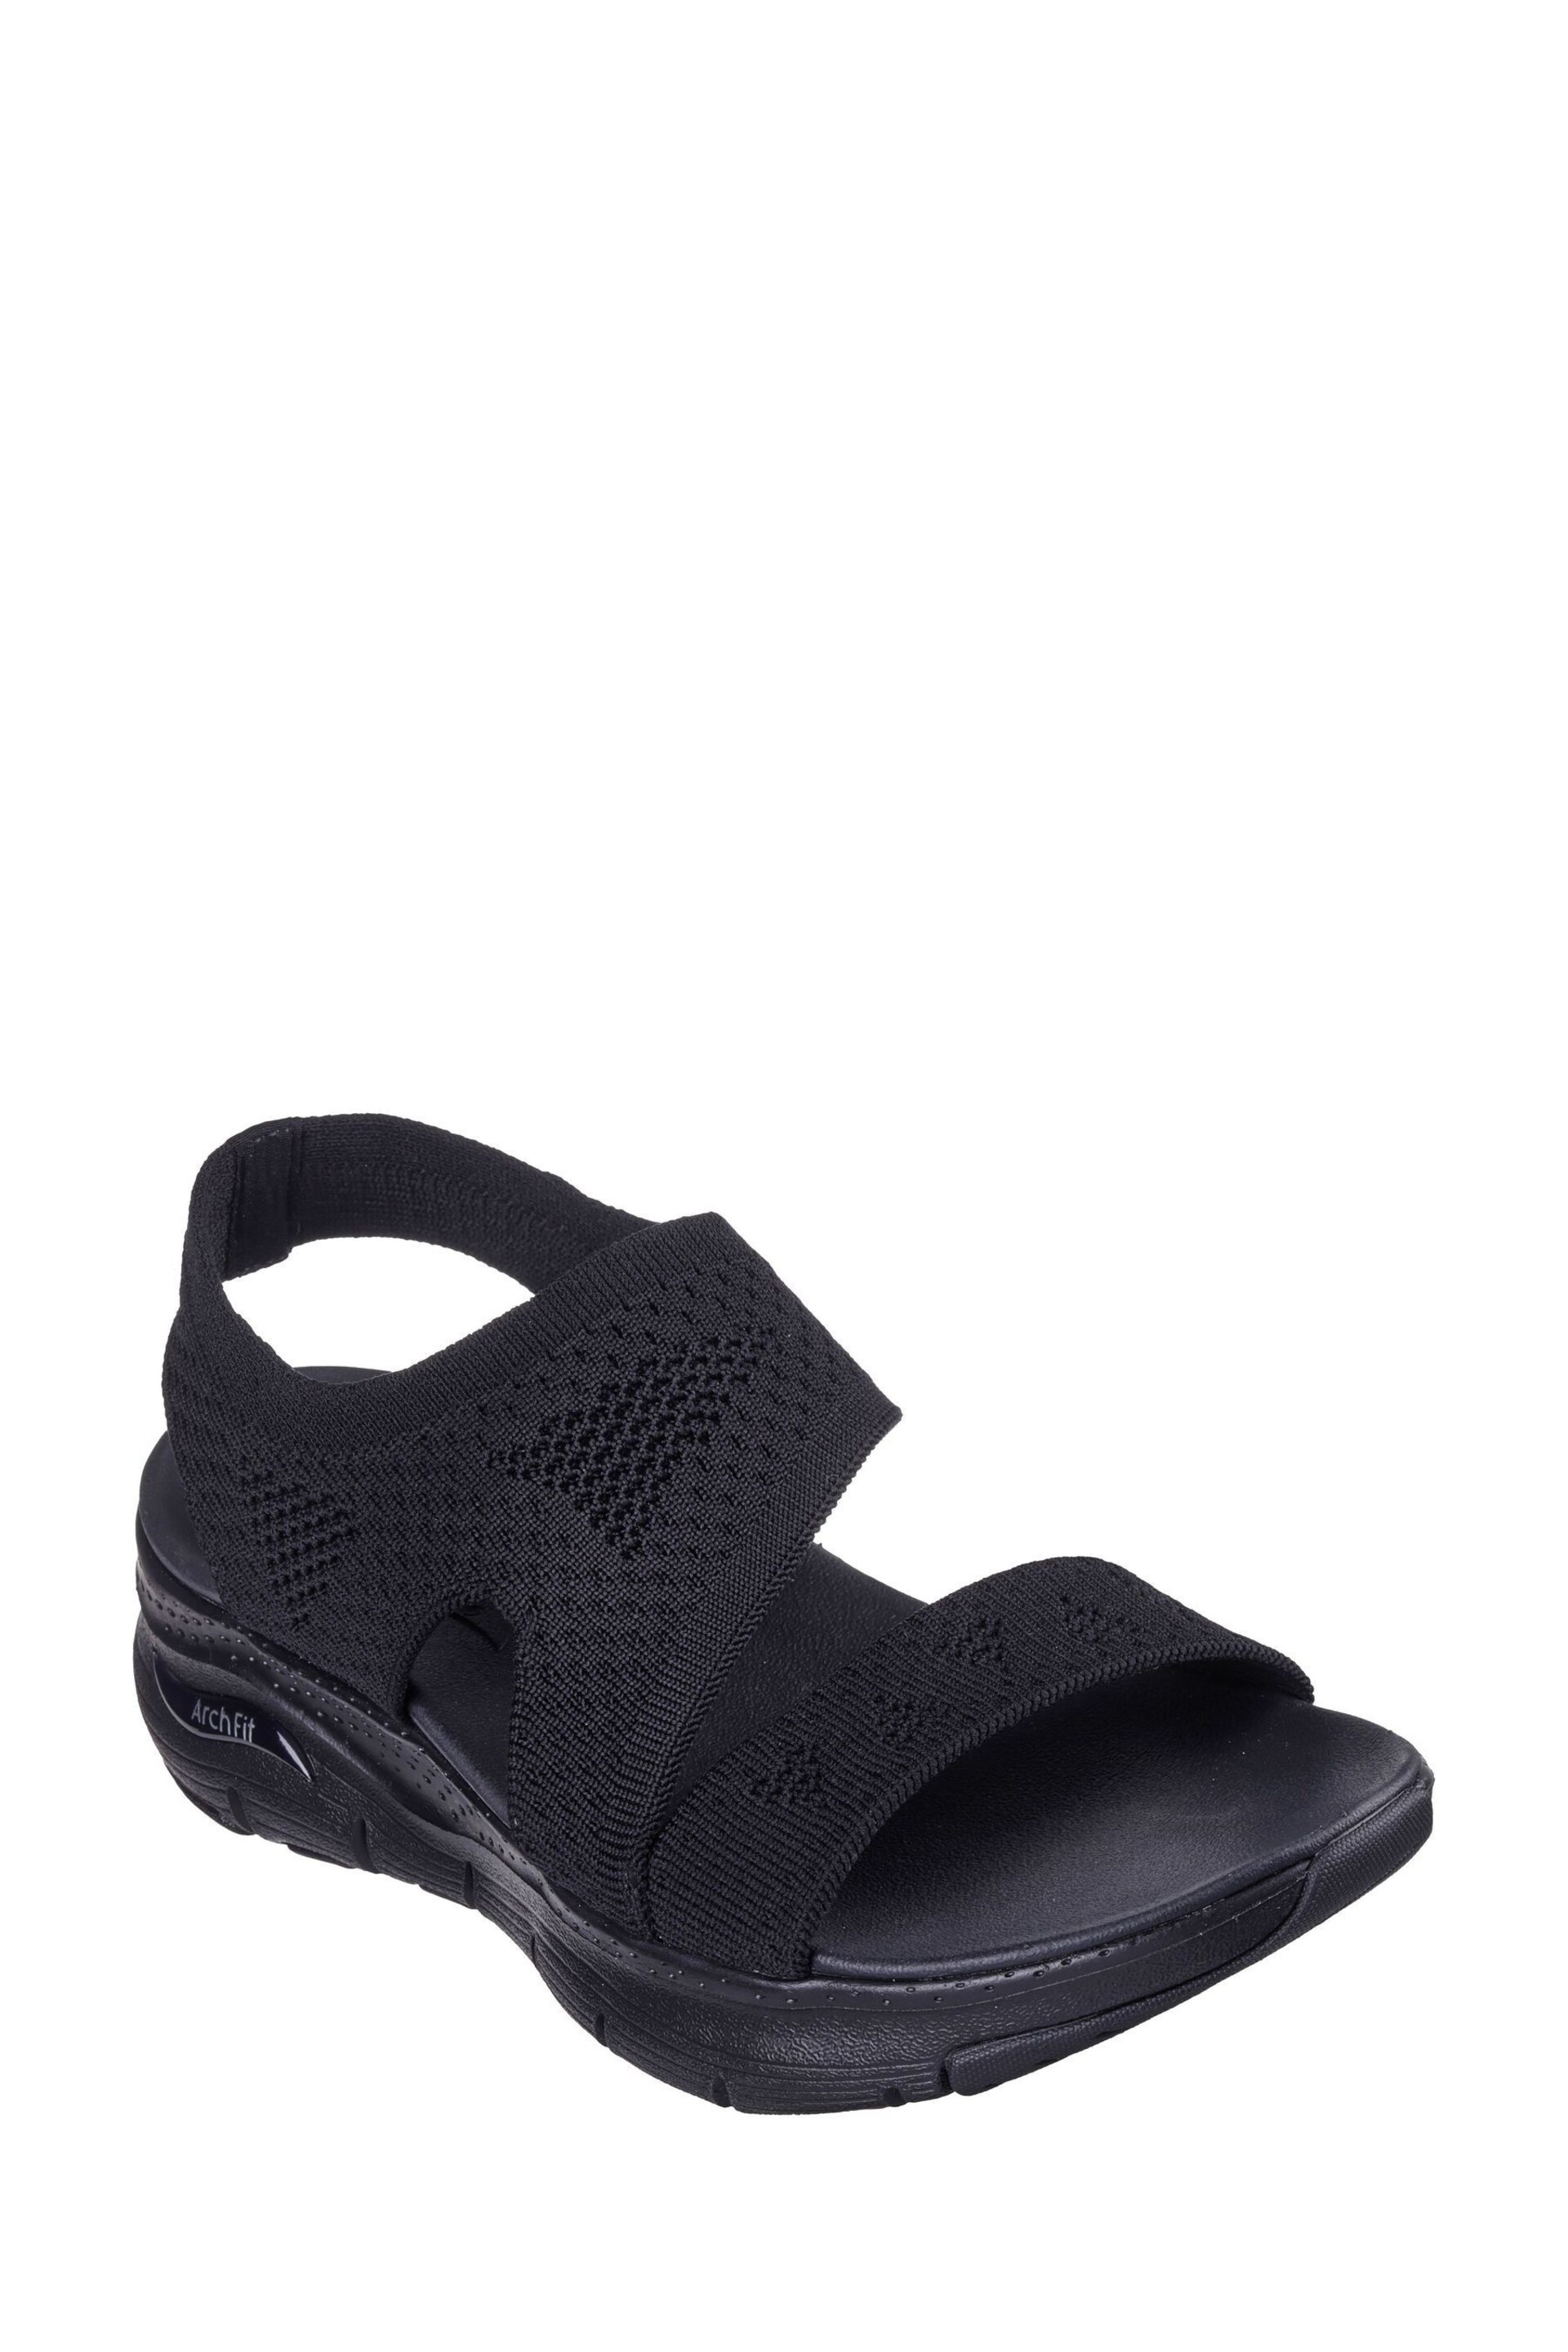 Skechers Black Sandals - Image 3 of 5